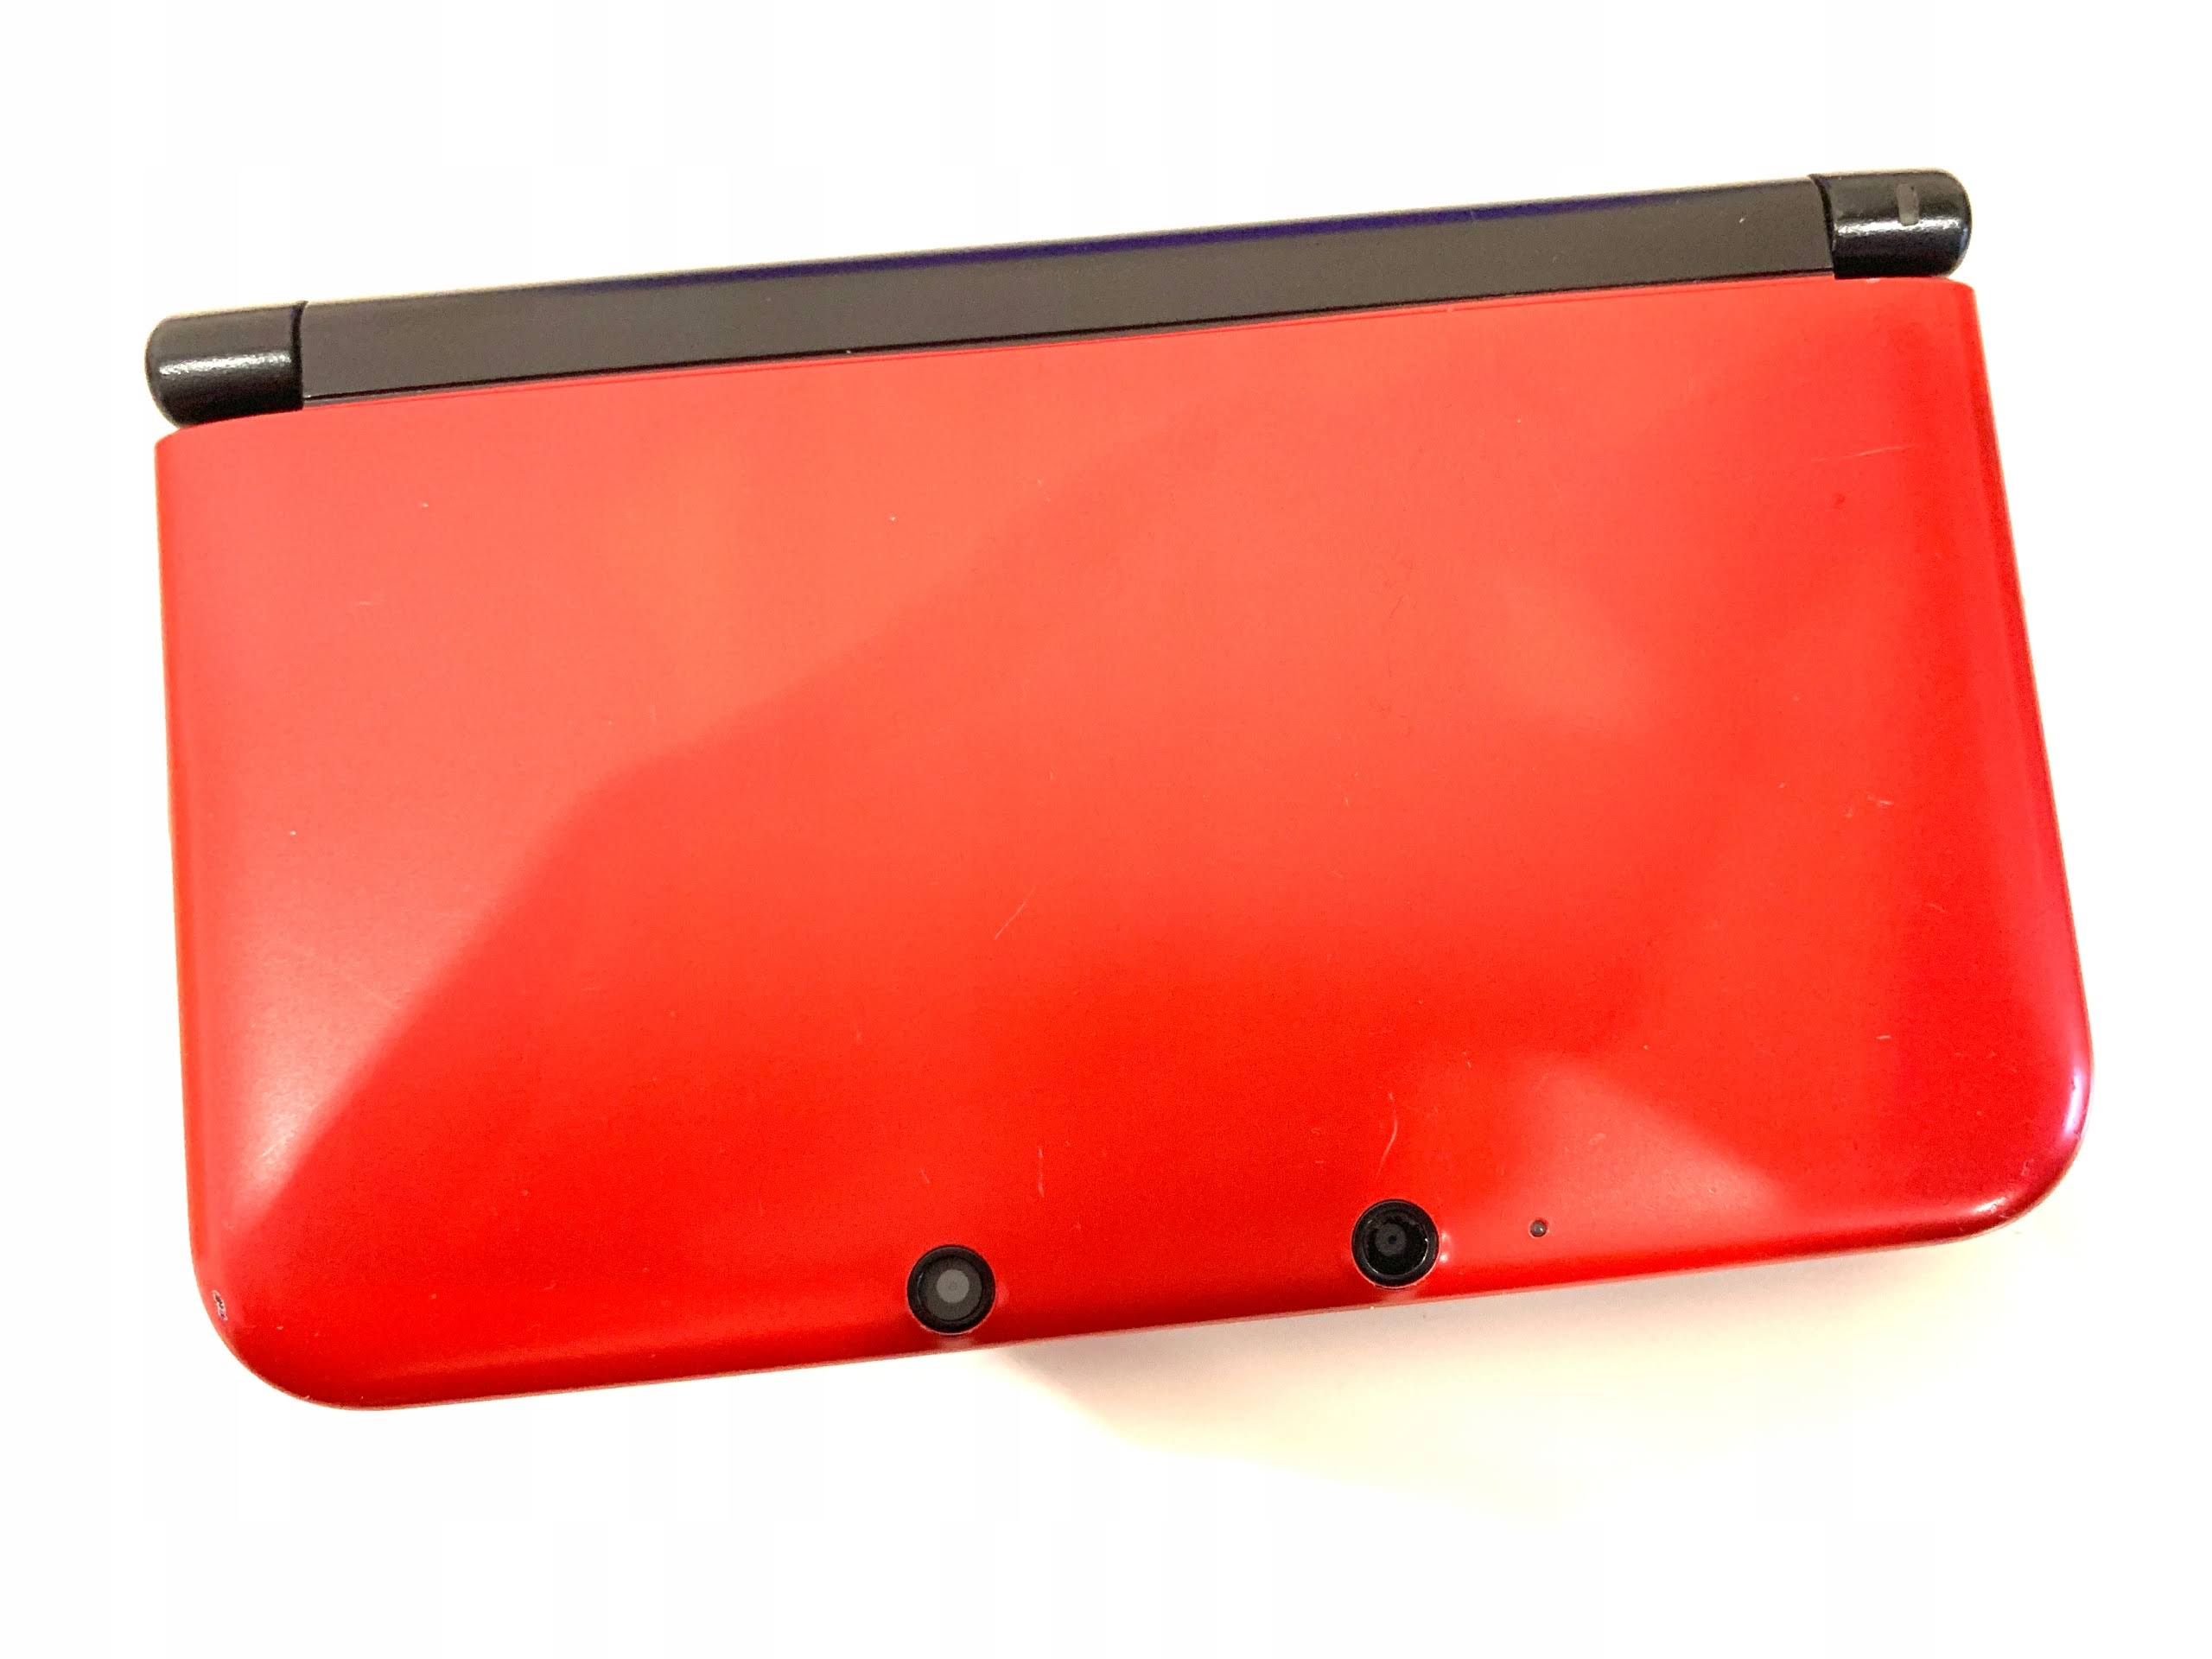 Nintendo 3DS XL - Red/Black